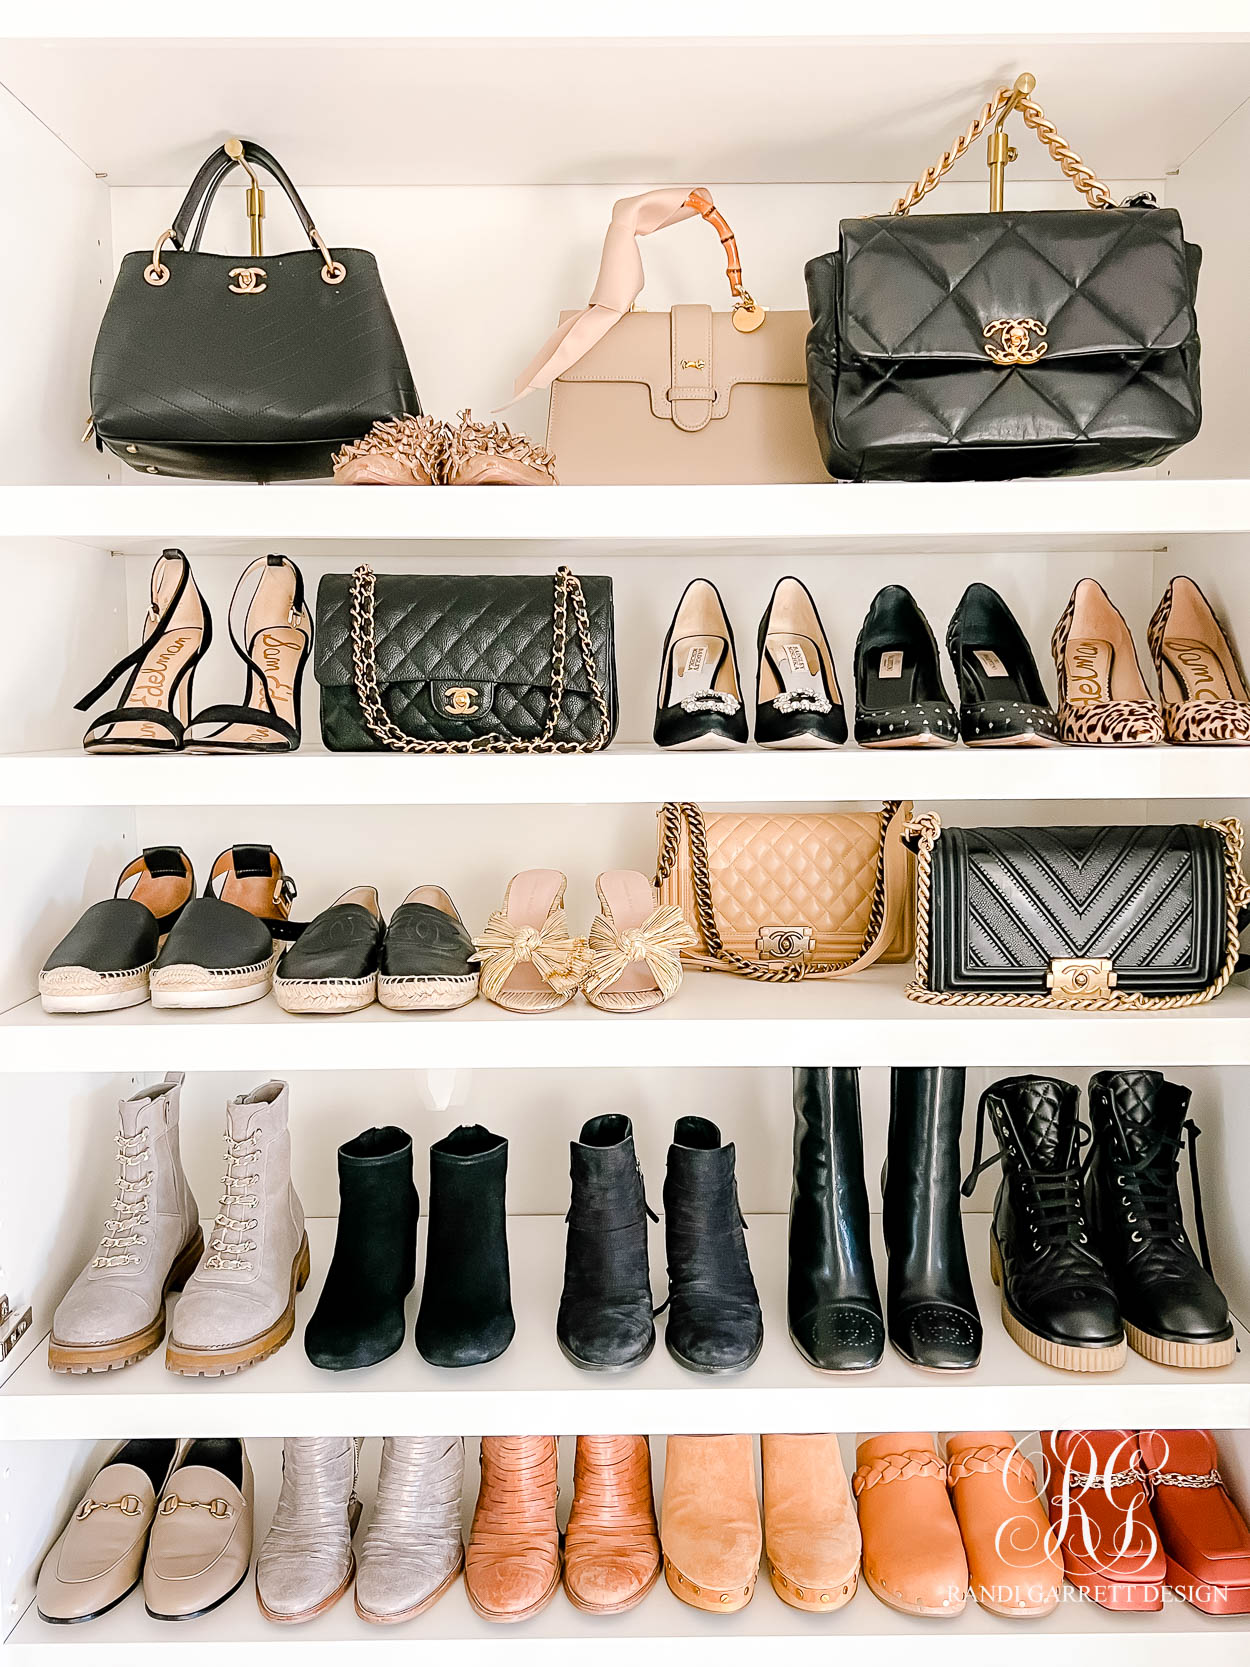 How to Create a Timeless Handbag + Shoe Collection - Randi Garrett